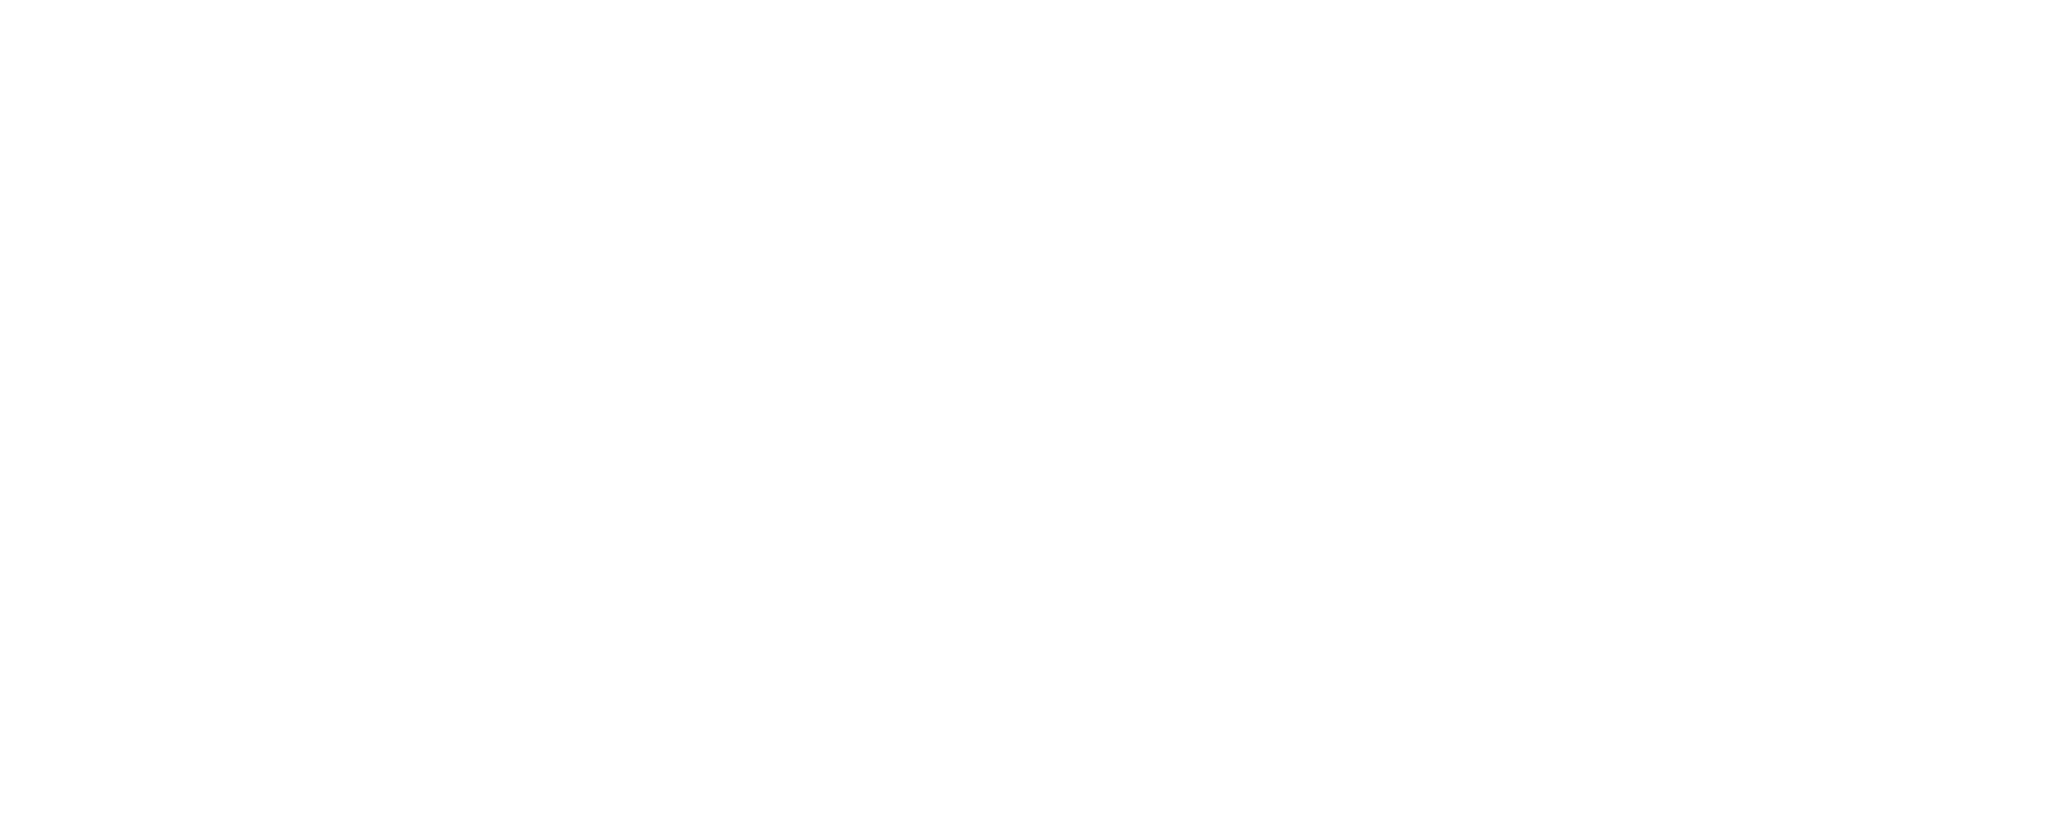 north charleston chamber of commerce marketing design social media seo